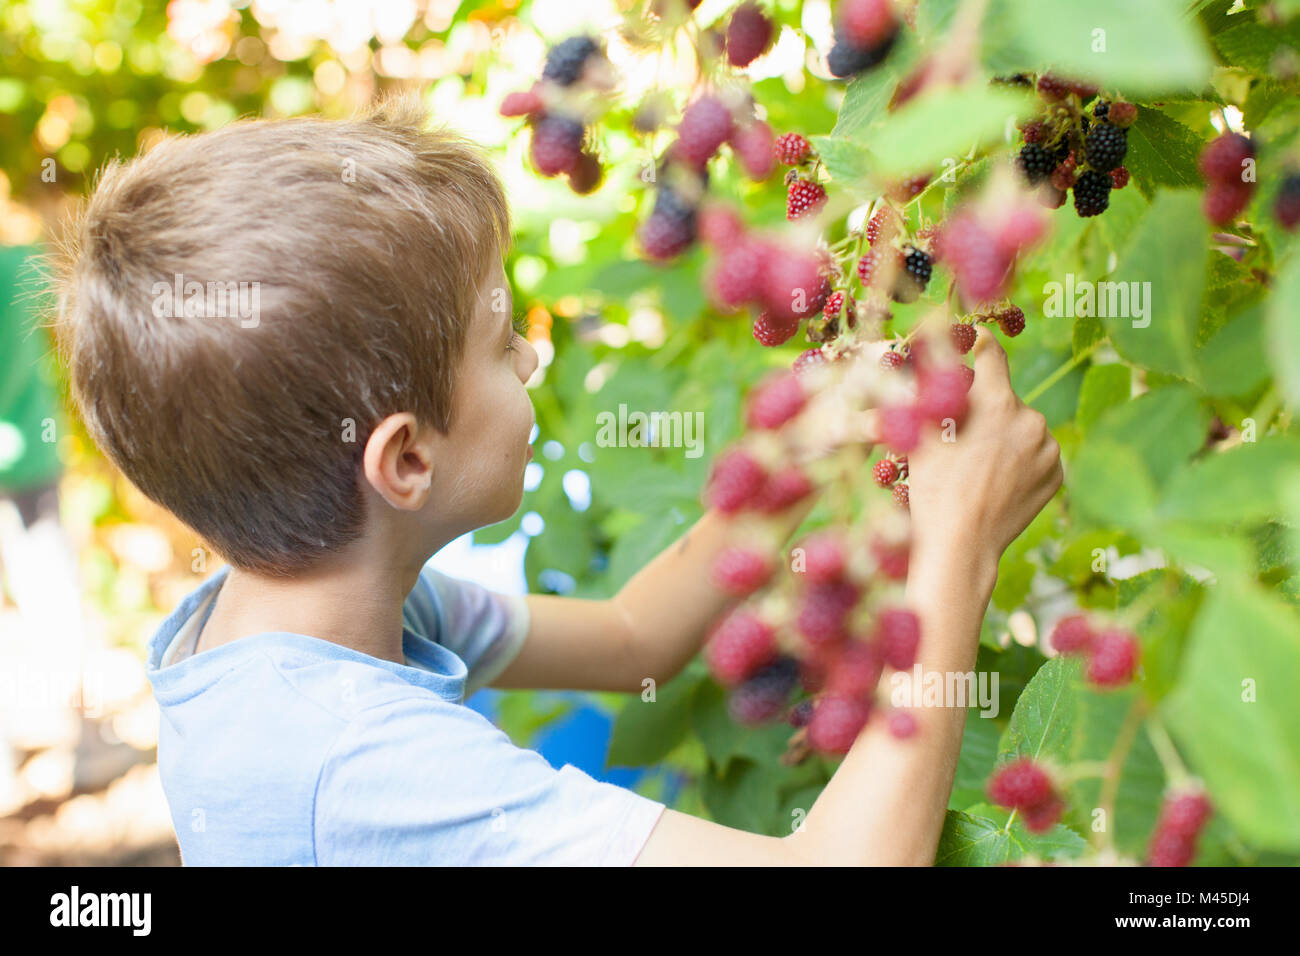 Boy picking berries off tree Stock Photo